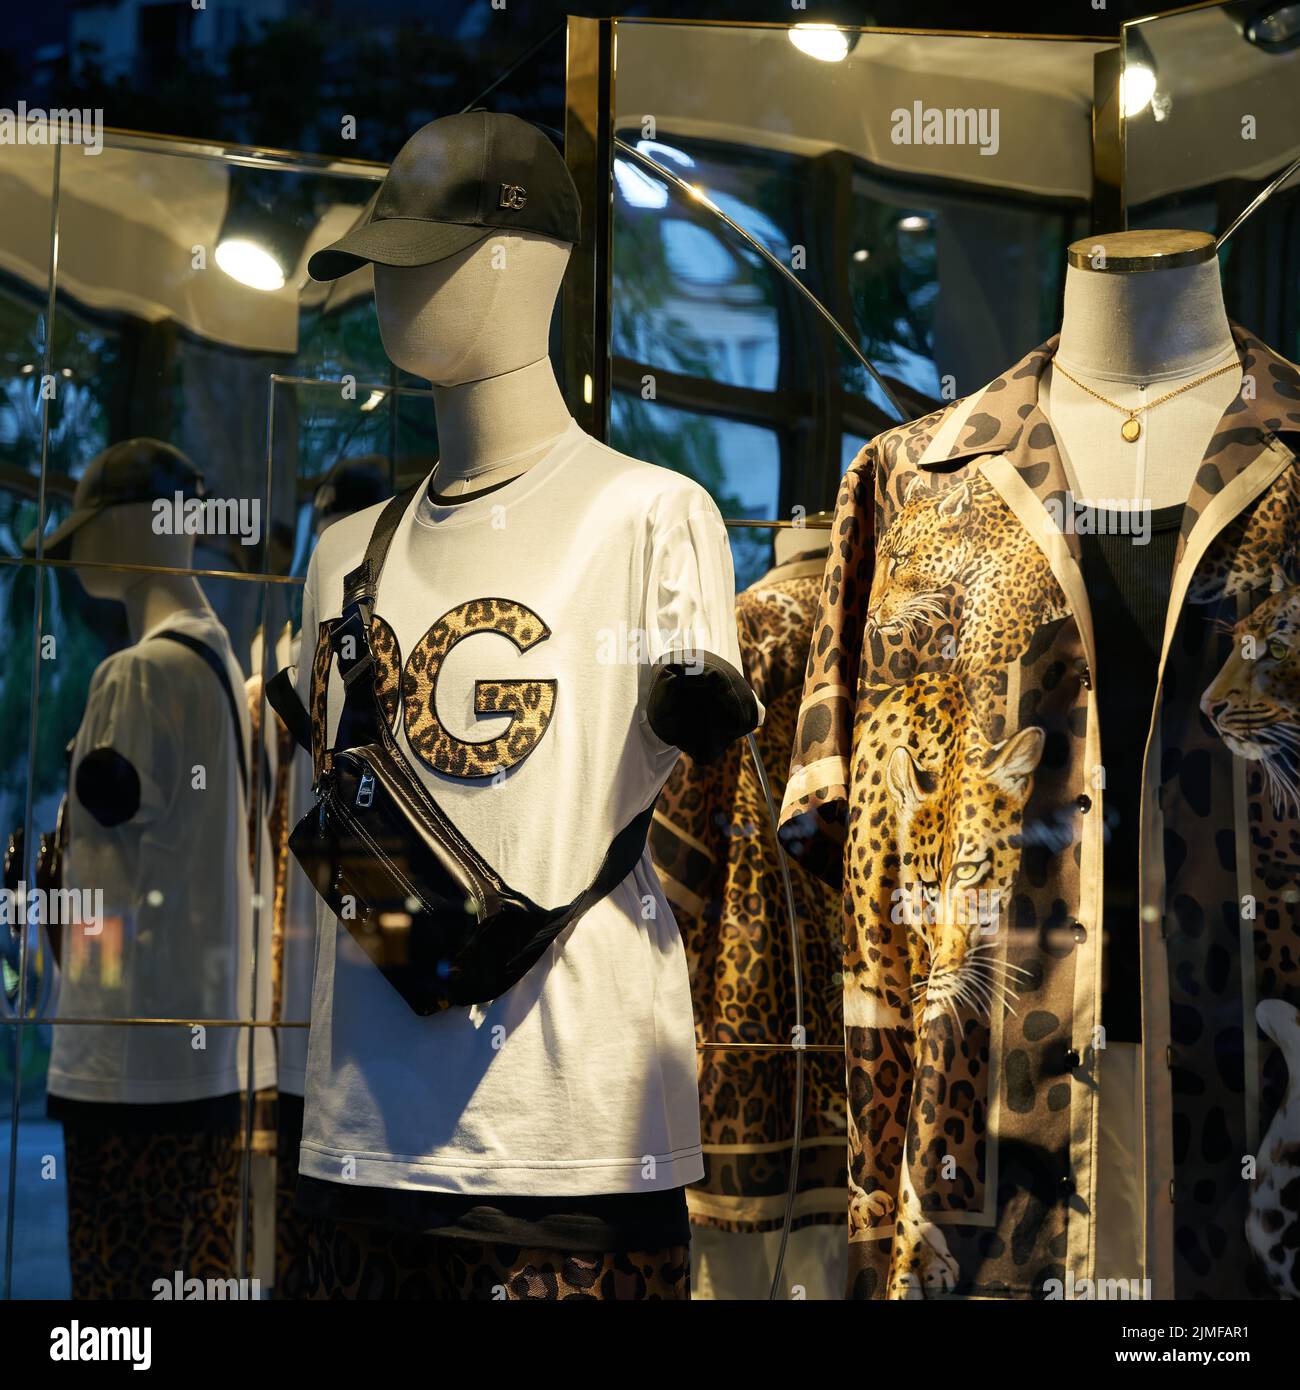 Dolce & Gabbana brand fashion in the window of a shopping street in Berlin Stock Photo